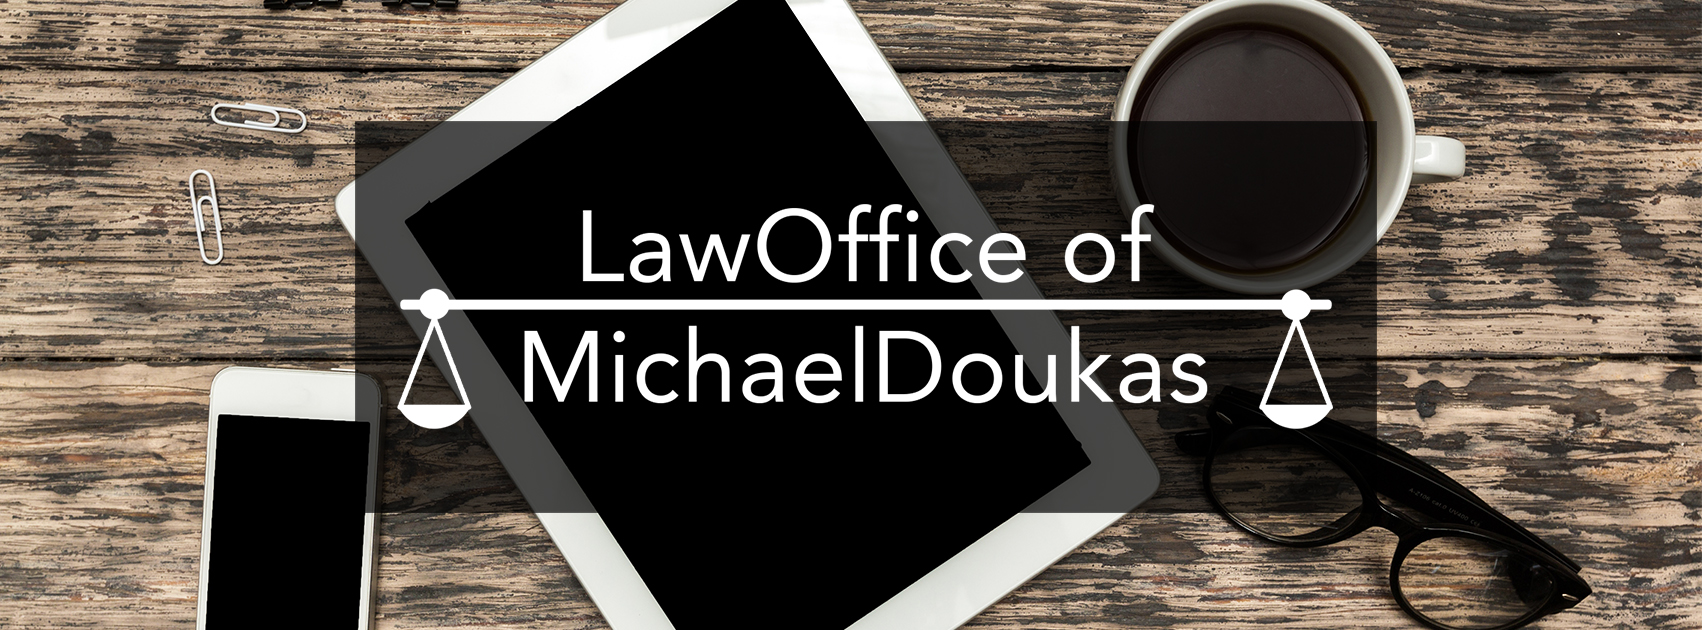 LawOffice of MichaelDoukas